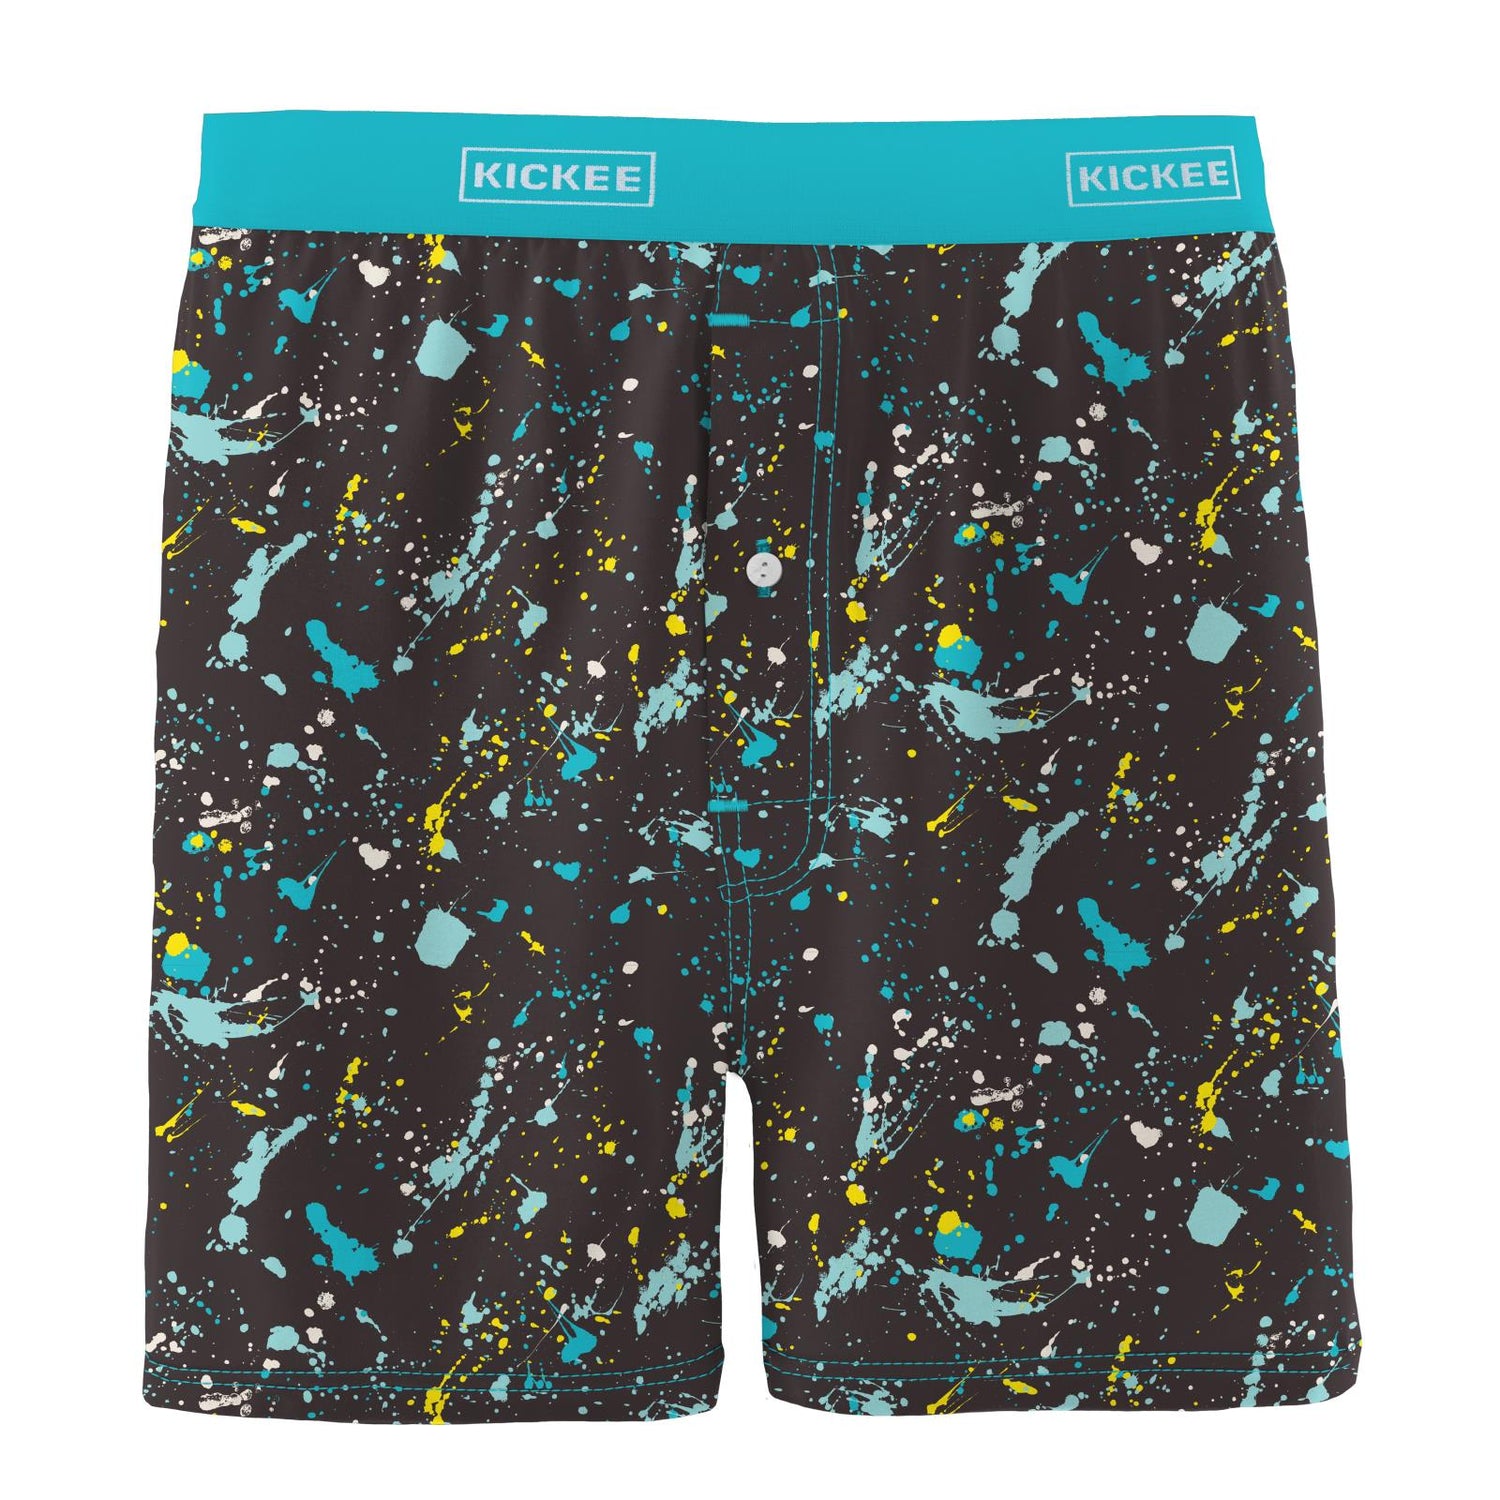 Men's Print Boxer Shorts in Confetti Splatter Paint